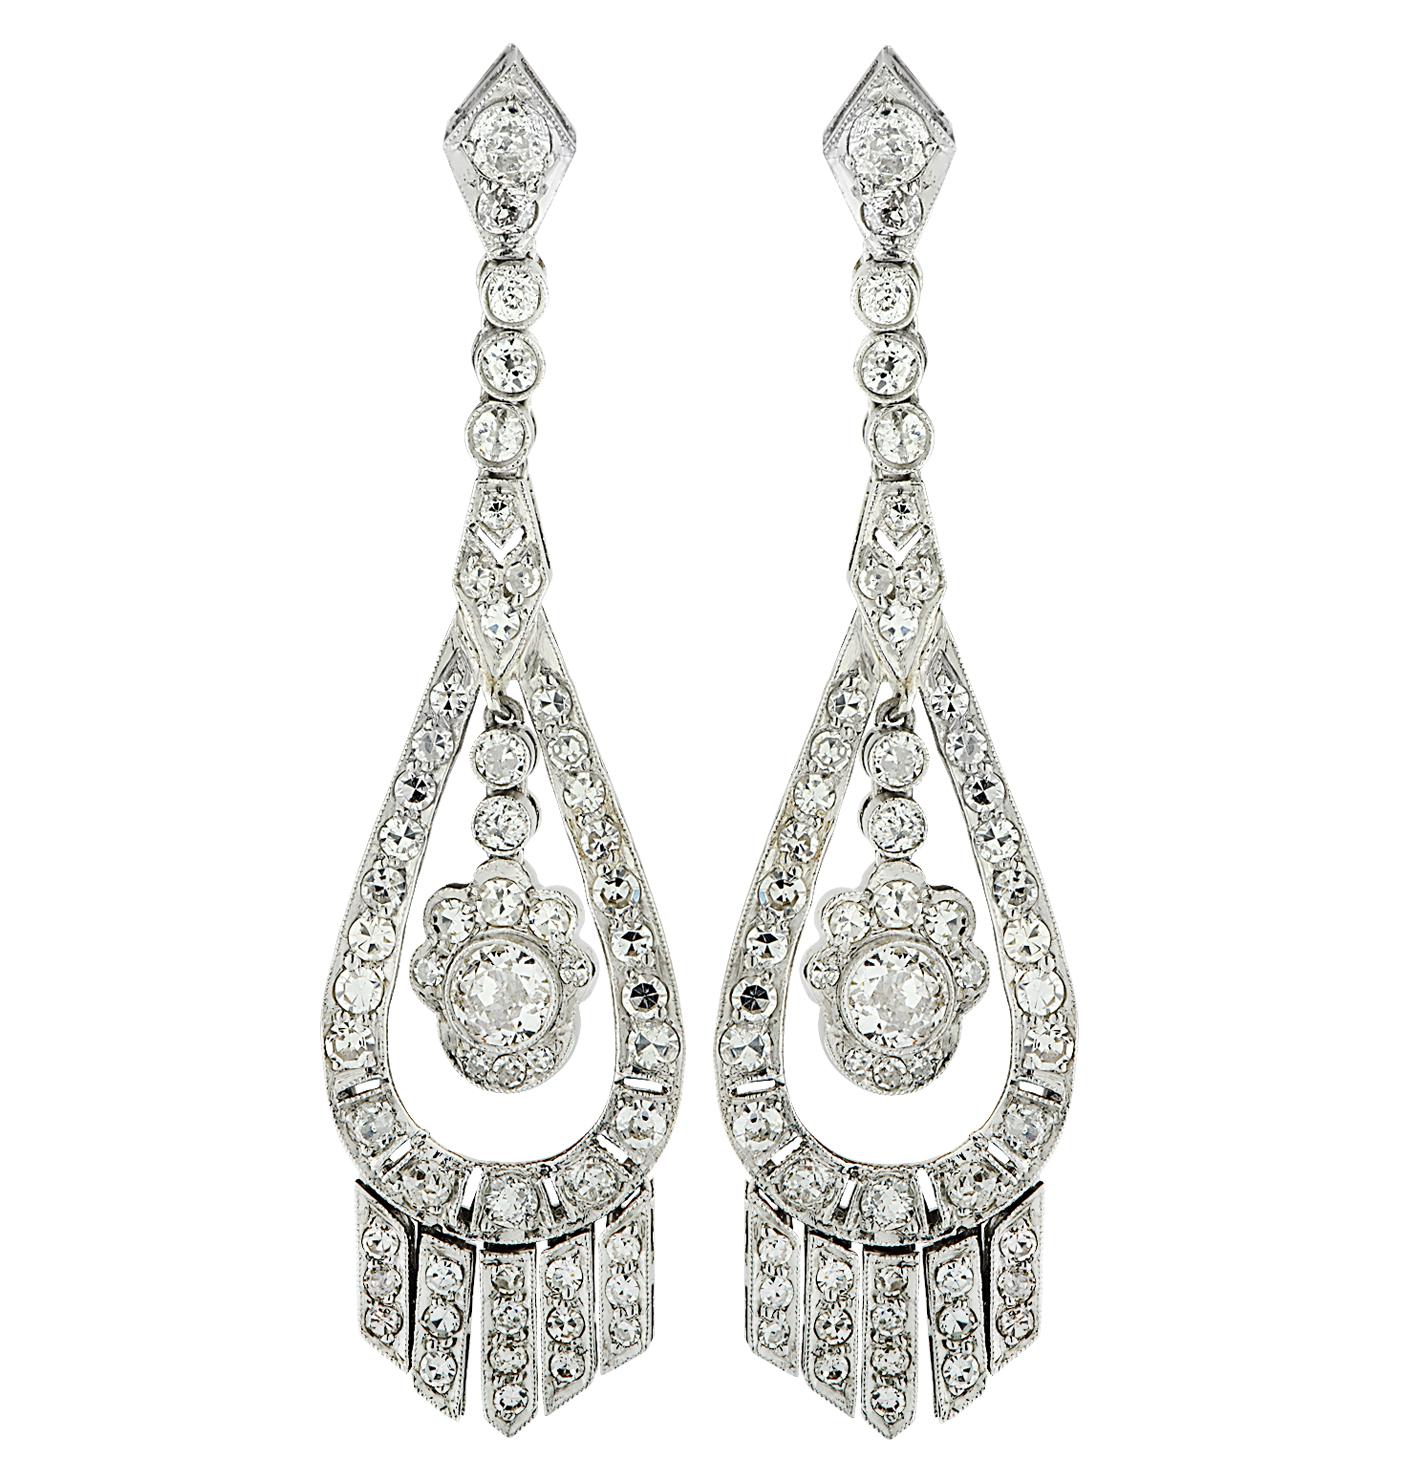 .6 carat diamond earrings